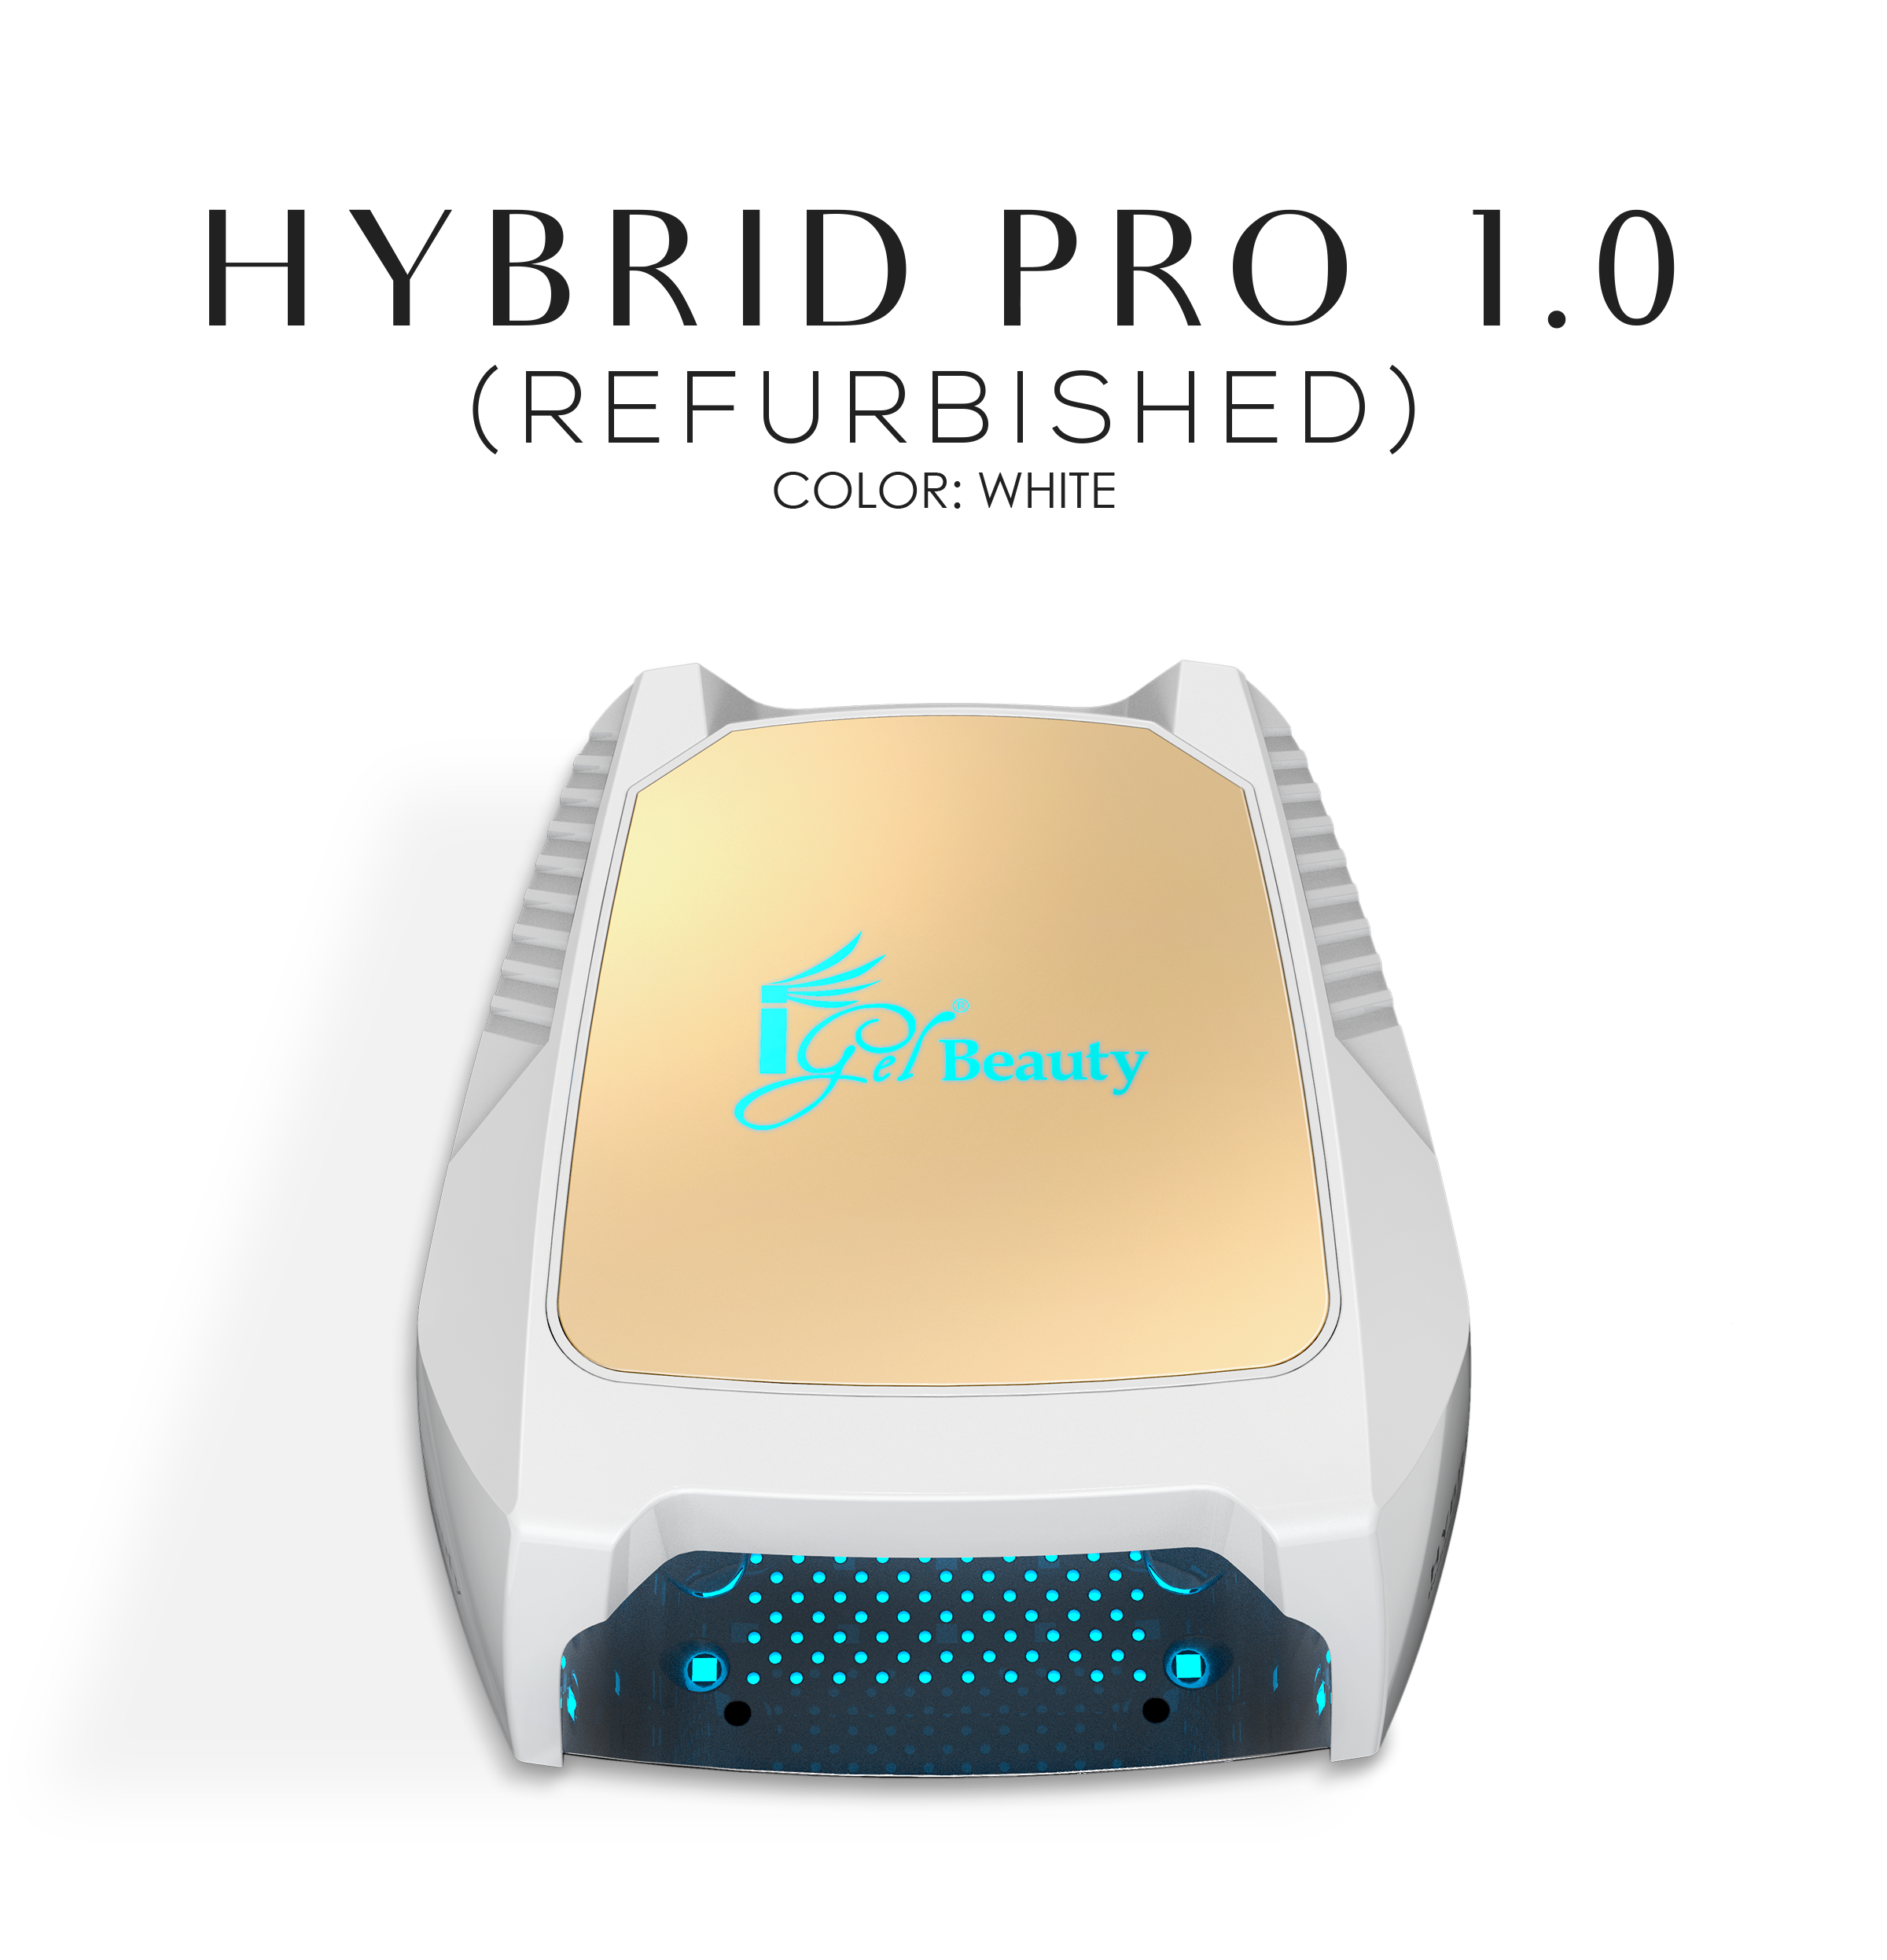 REFURBISHED - HYBRID PRO 1.0 Wireless Rechargeable UV/LED Lamp WHITE